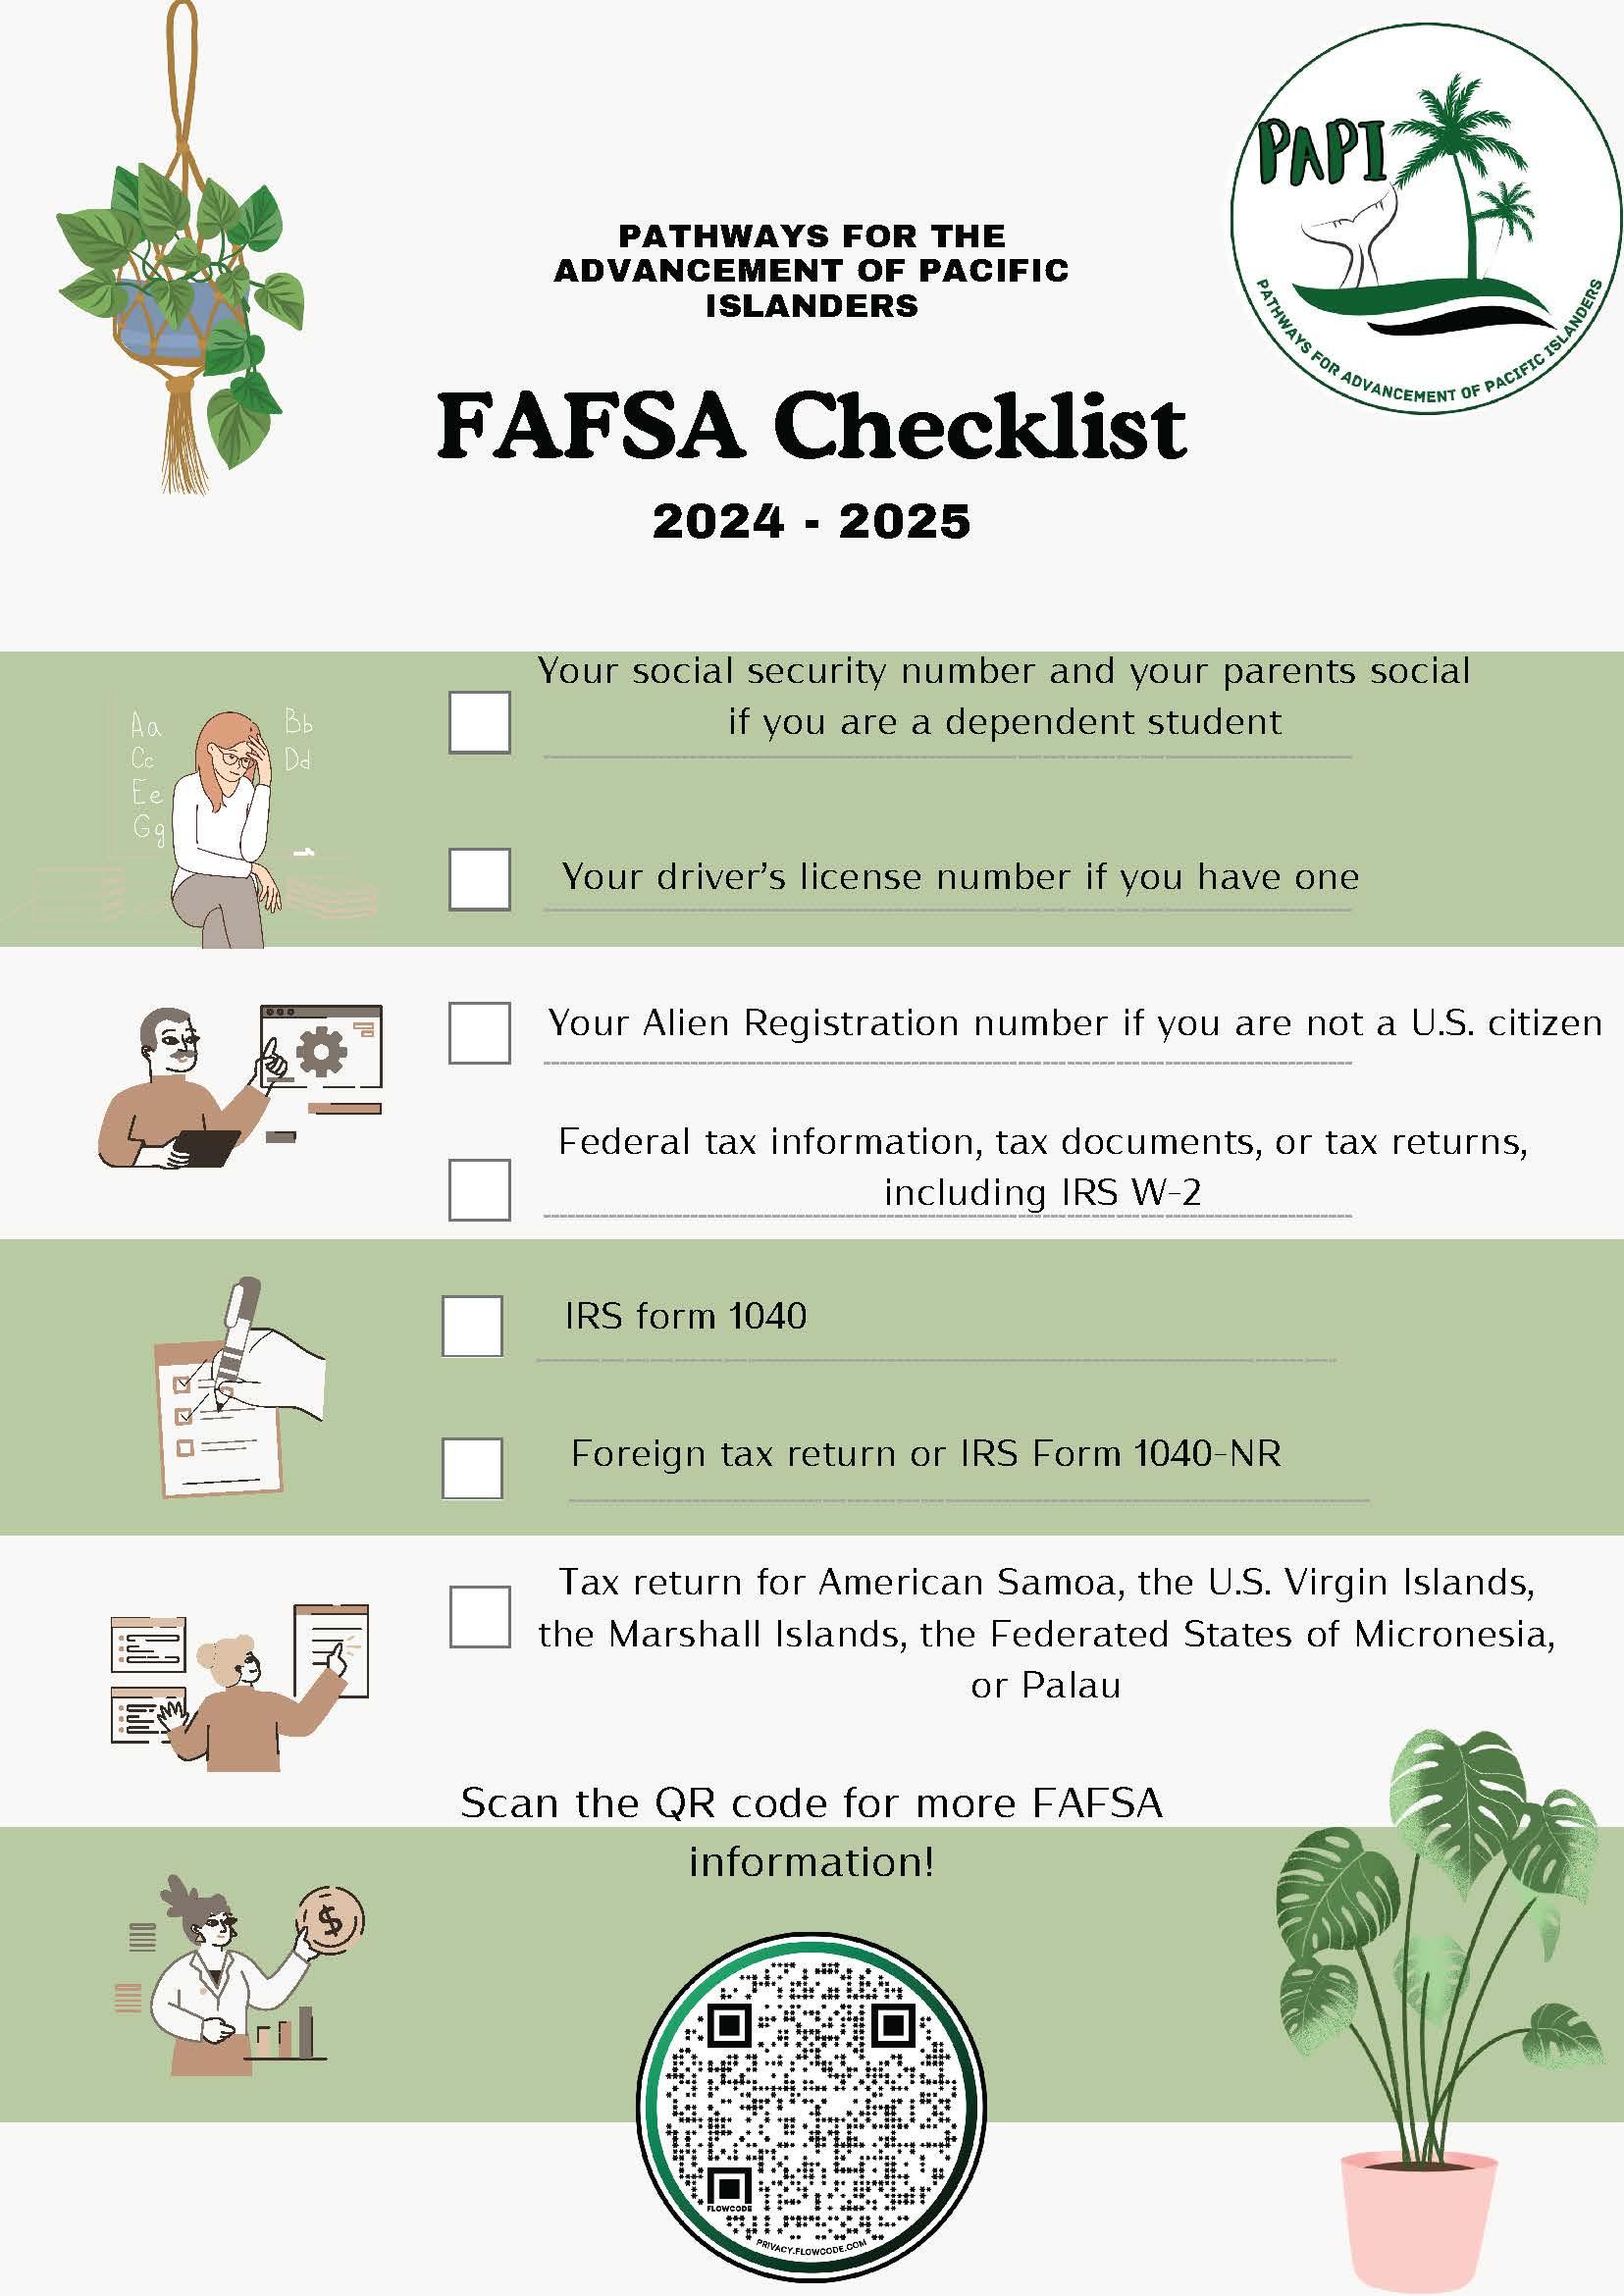 FAFSA checklist